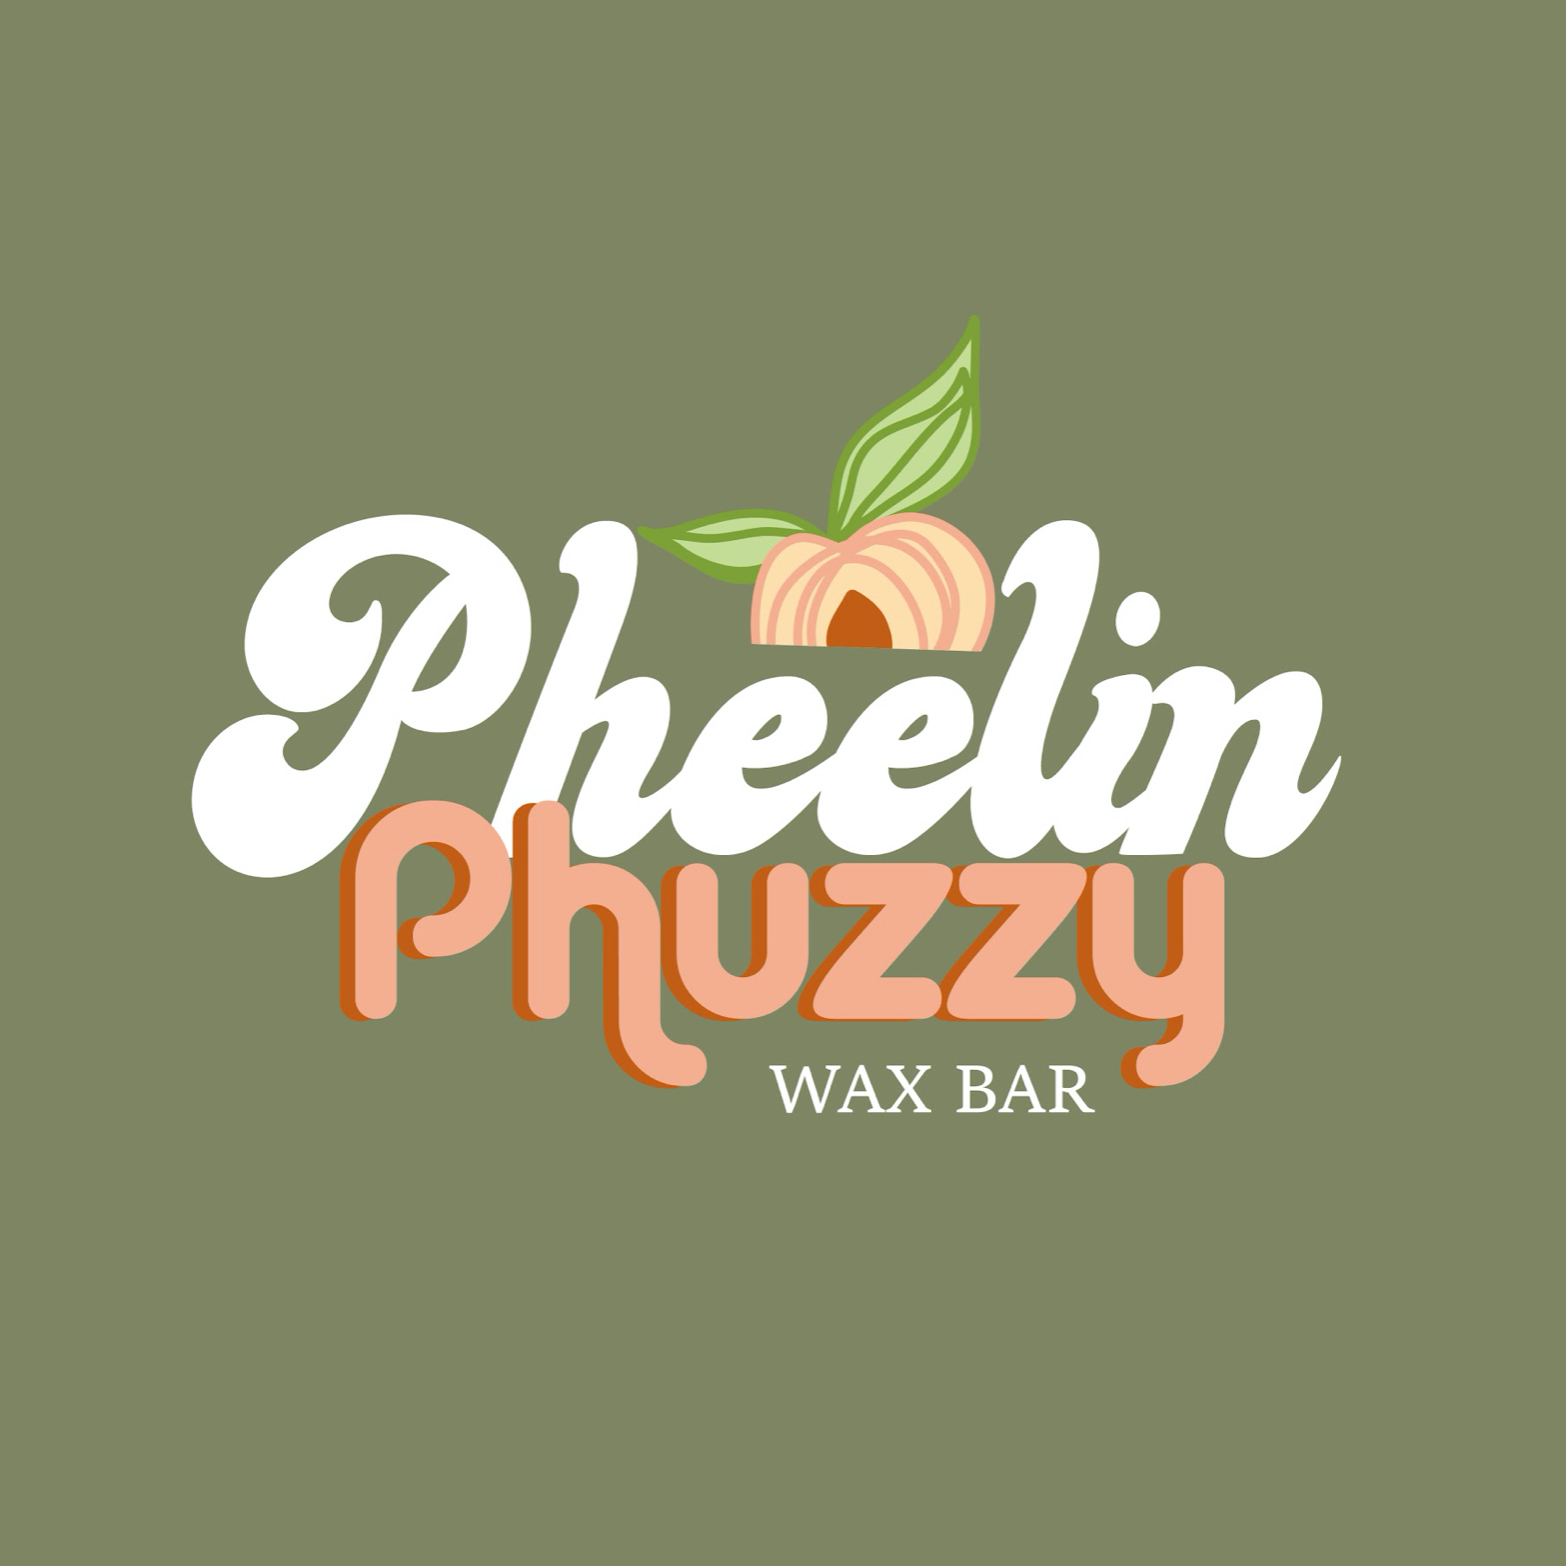 Pheelin’ Phuzzy Wax Bar